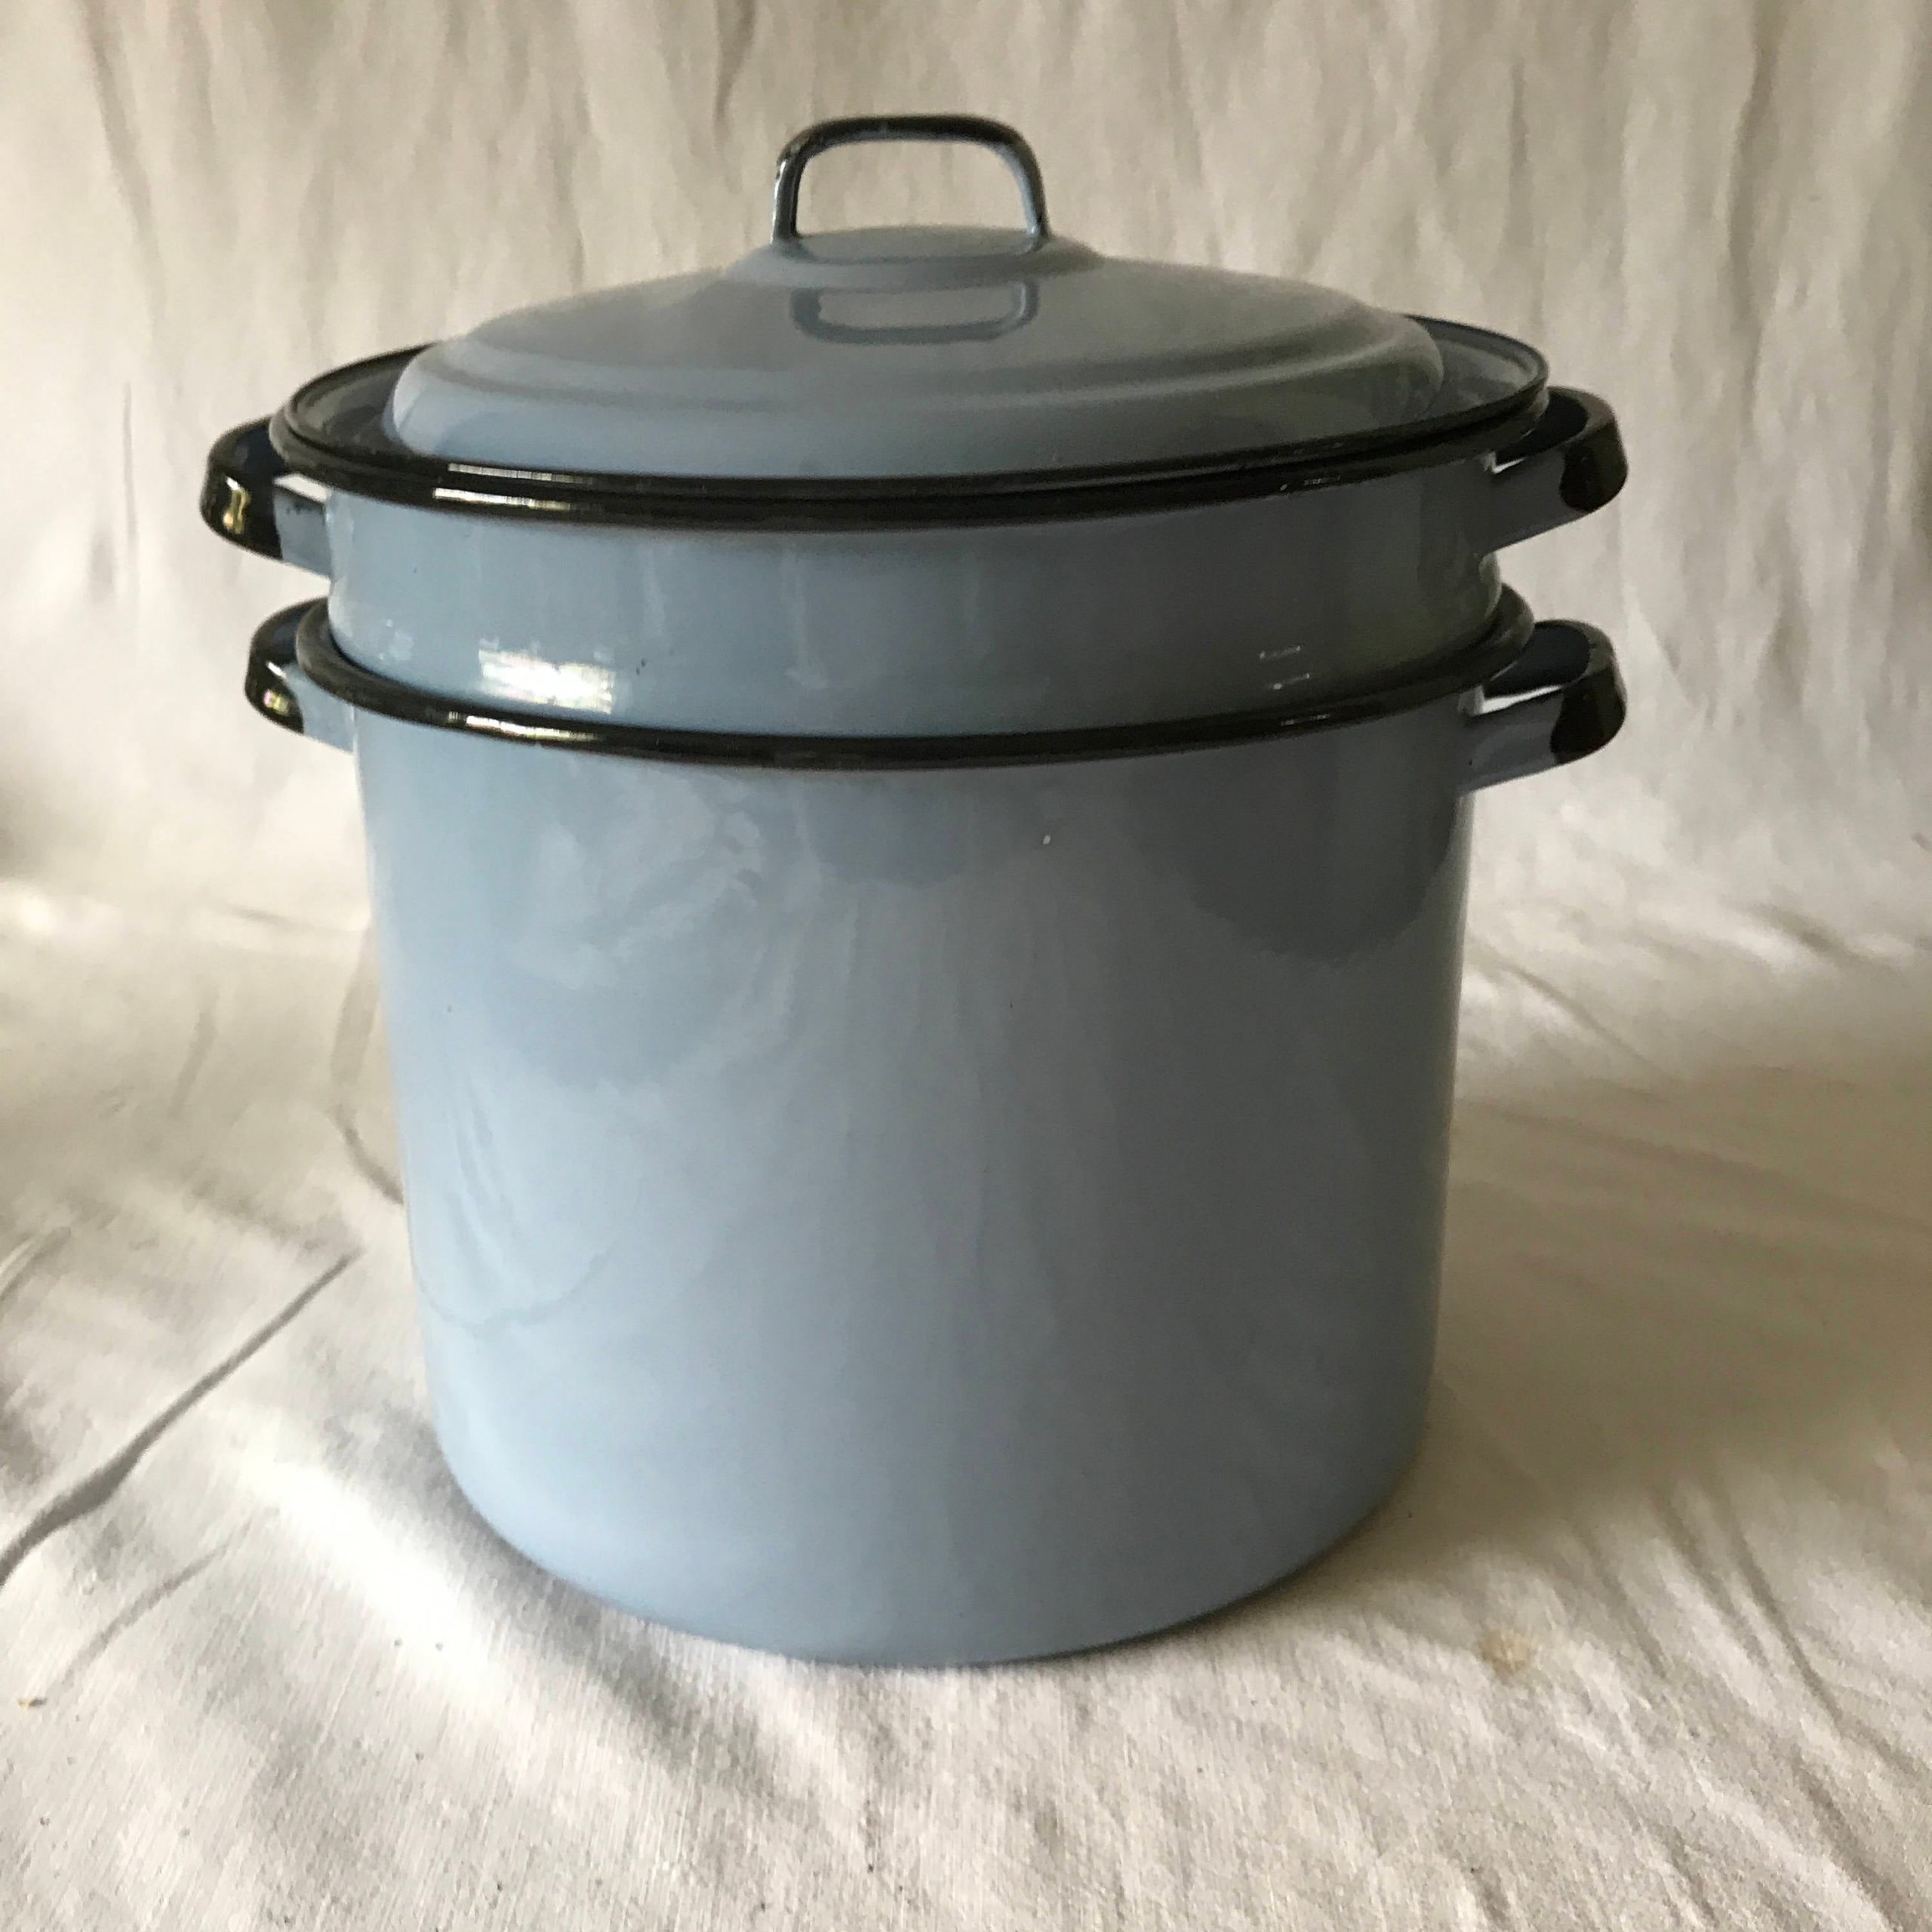 Enamelware Double Boiler Bakelite Knob 40s Black/white Chippy Metal Pan Set  Vintage Cottage Core Kitchen, Stage Prop 